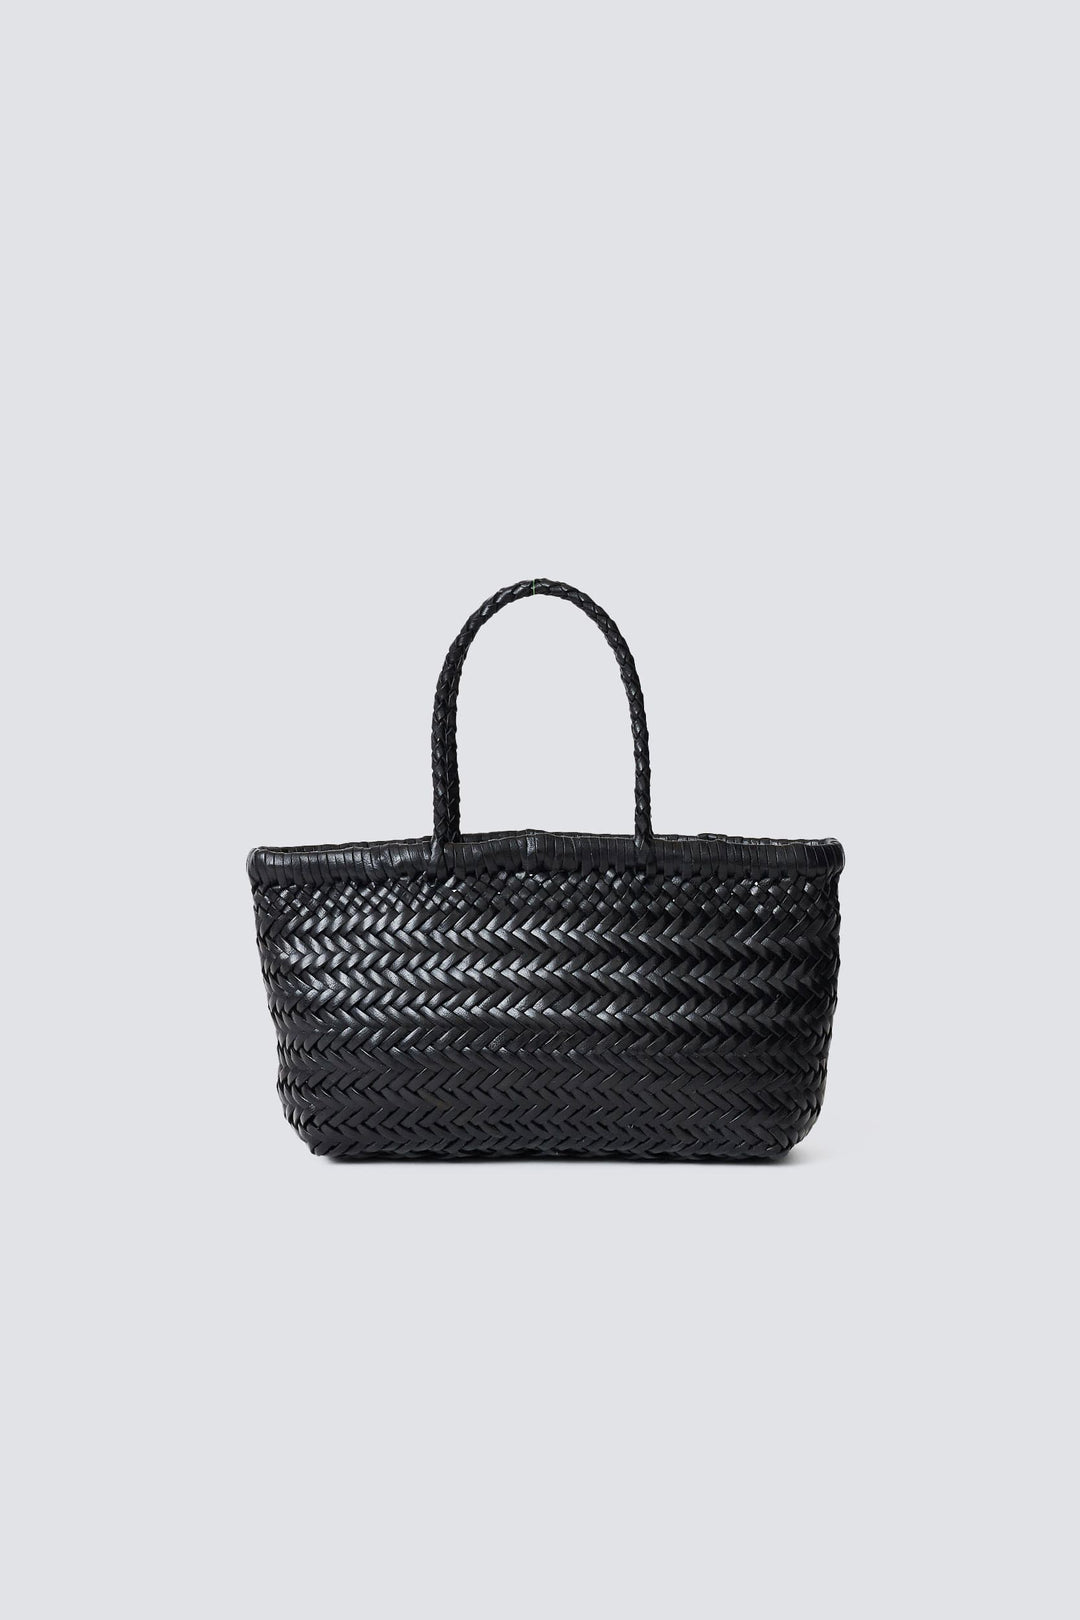 Dragon Diffusion woven leather bag handmade - Mini Flat Gora Black